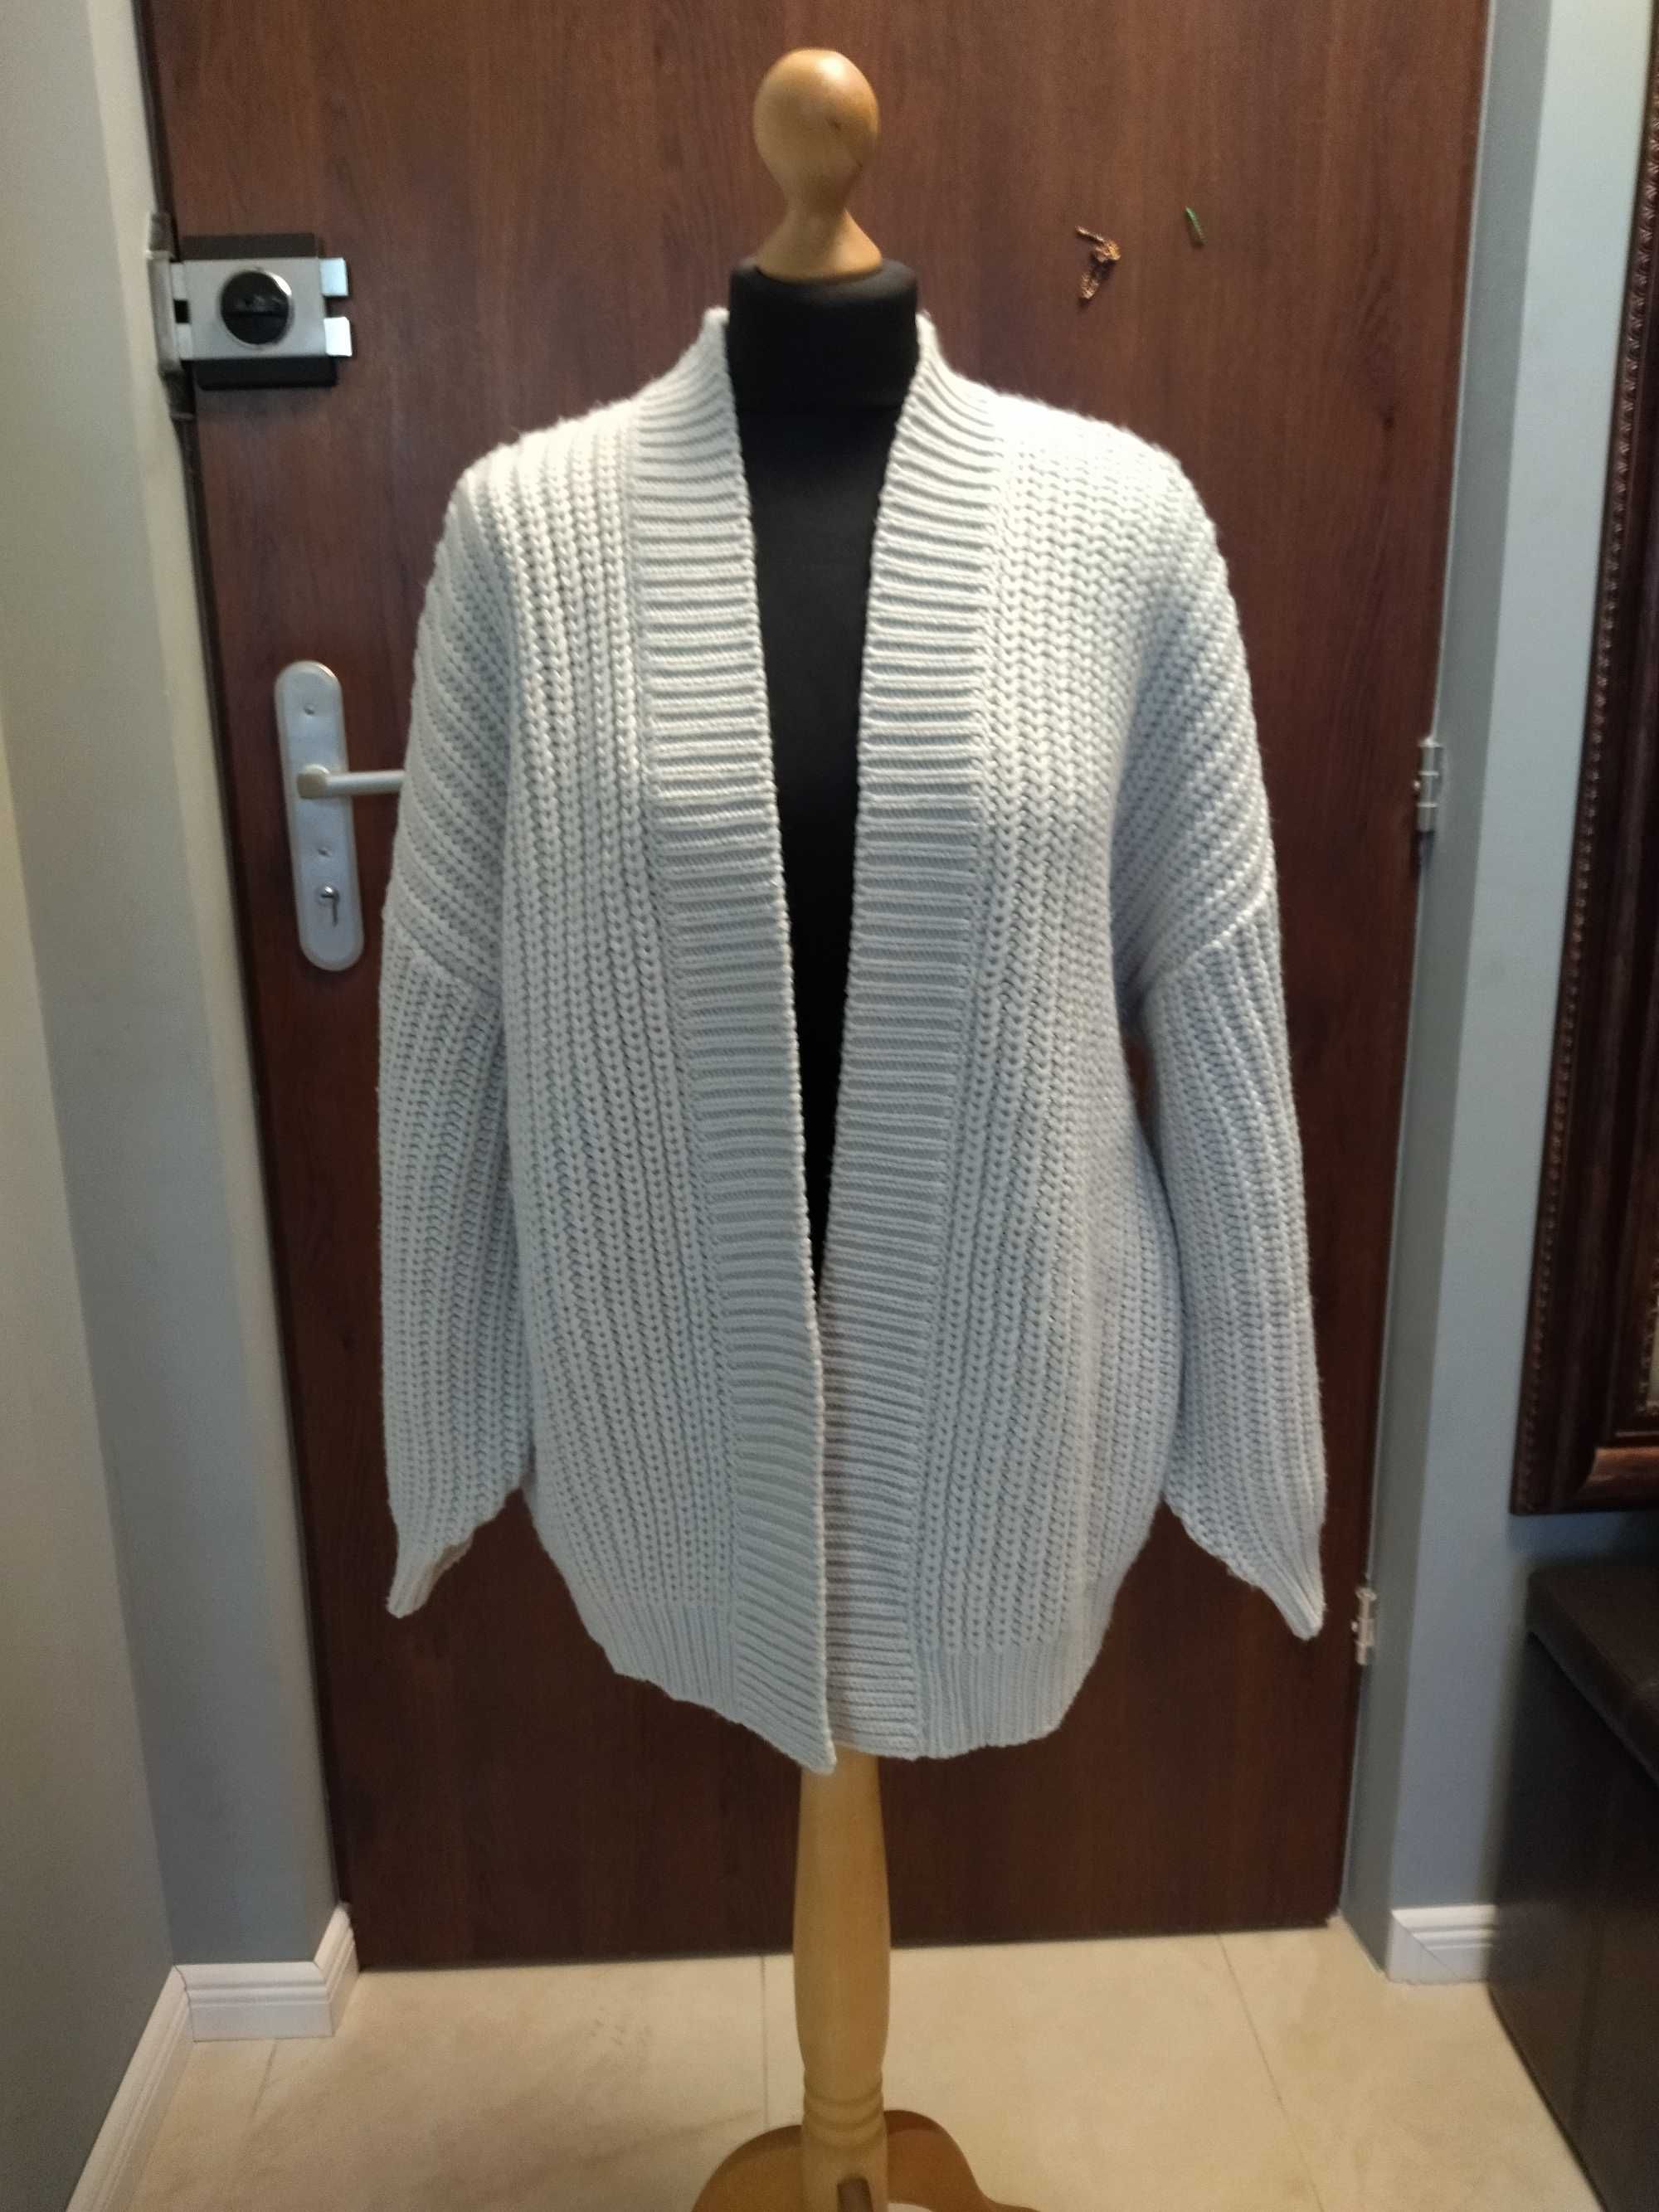 Sweter, kardigan marki Reserved, rozmiar L/XL,